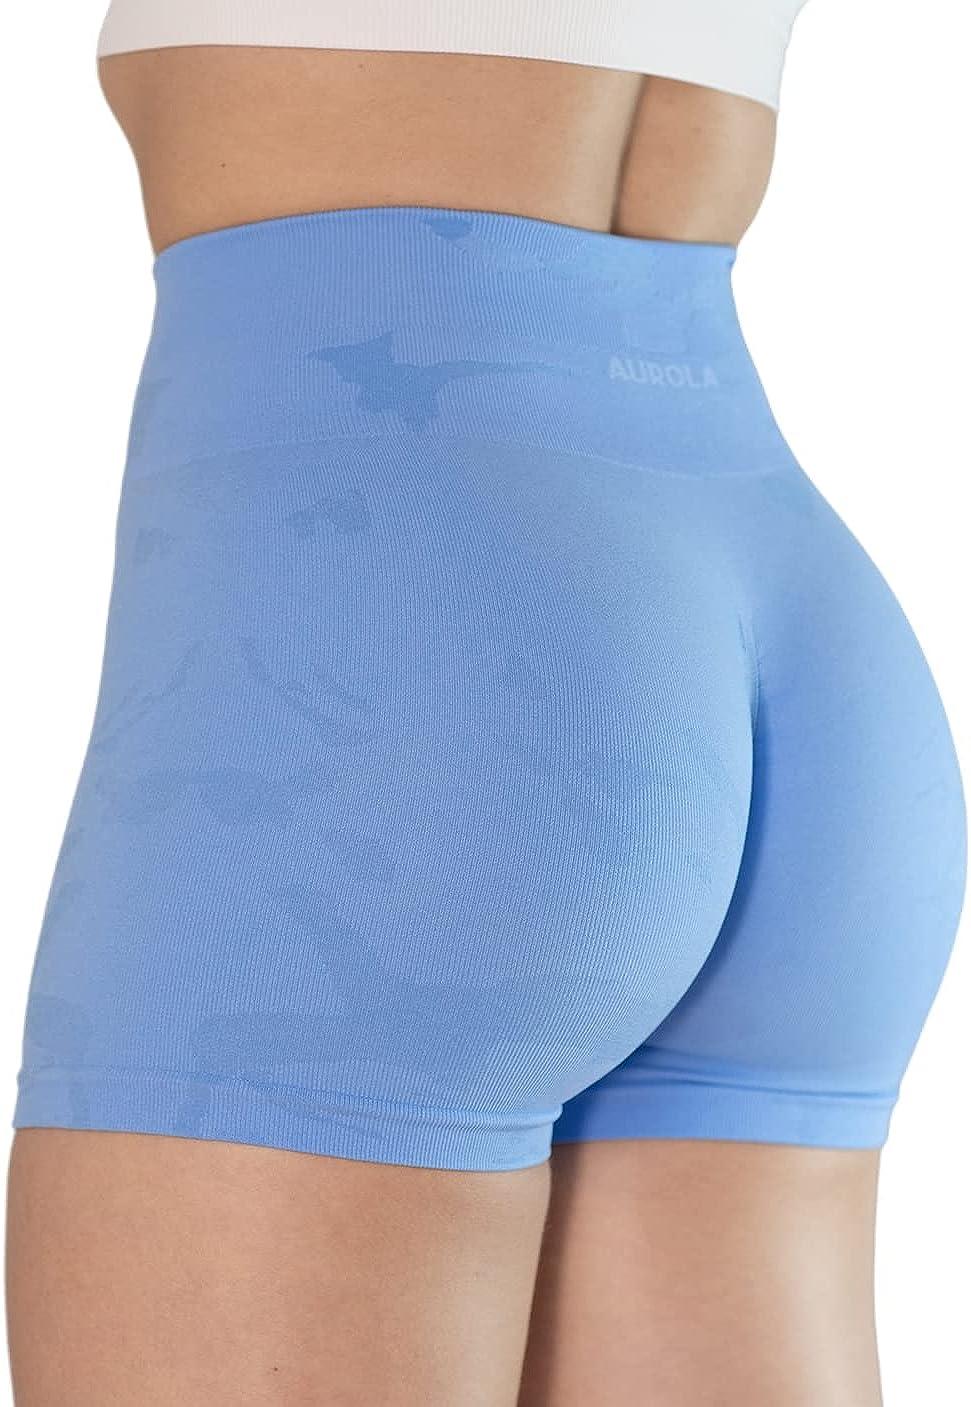 Buy AUROLA Intensify Workout Shorts for Women Seamless